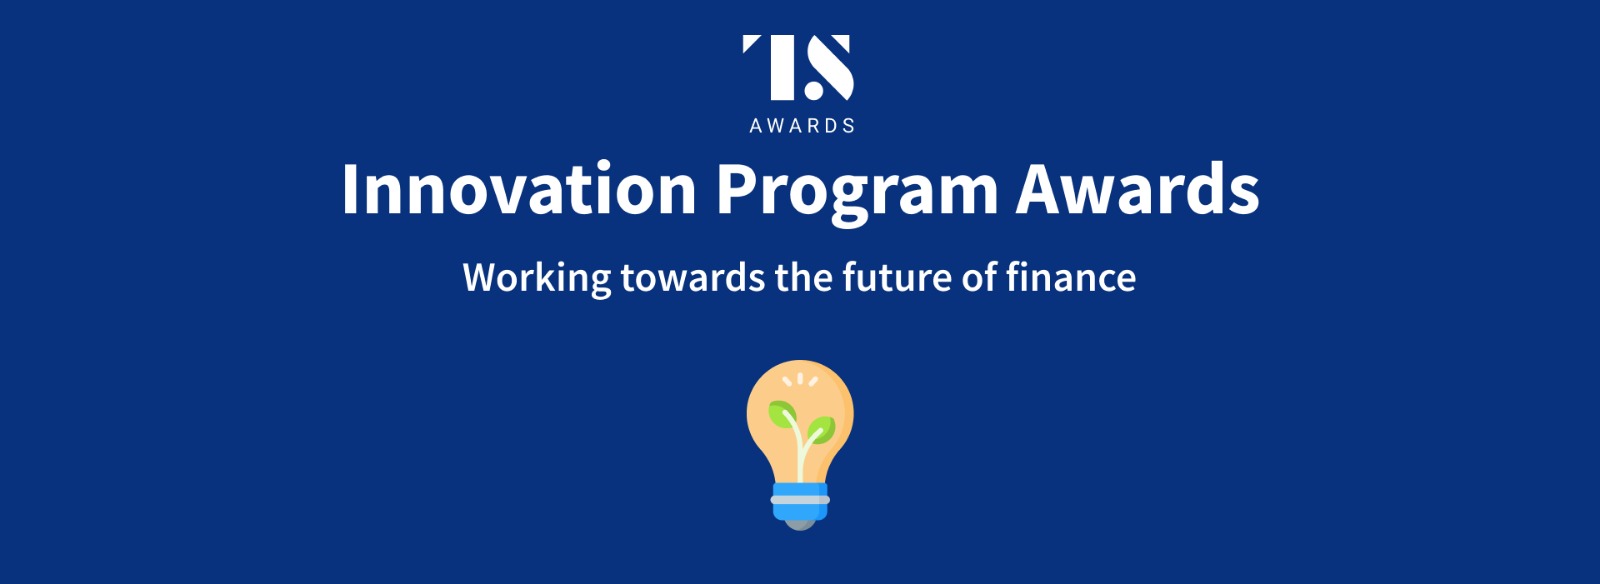 Introducing Tearsheet’s 2019 Innovation Program Awards